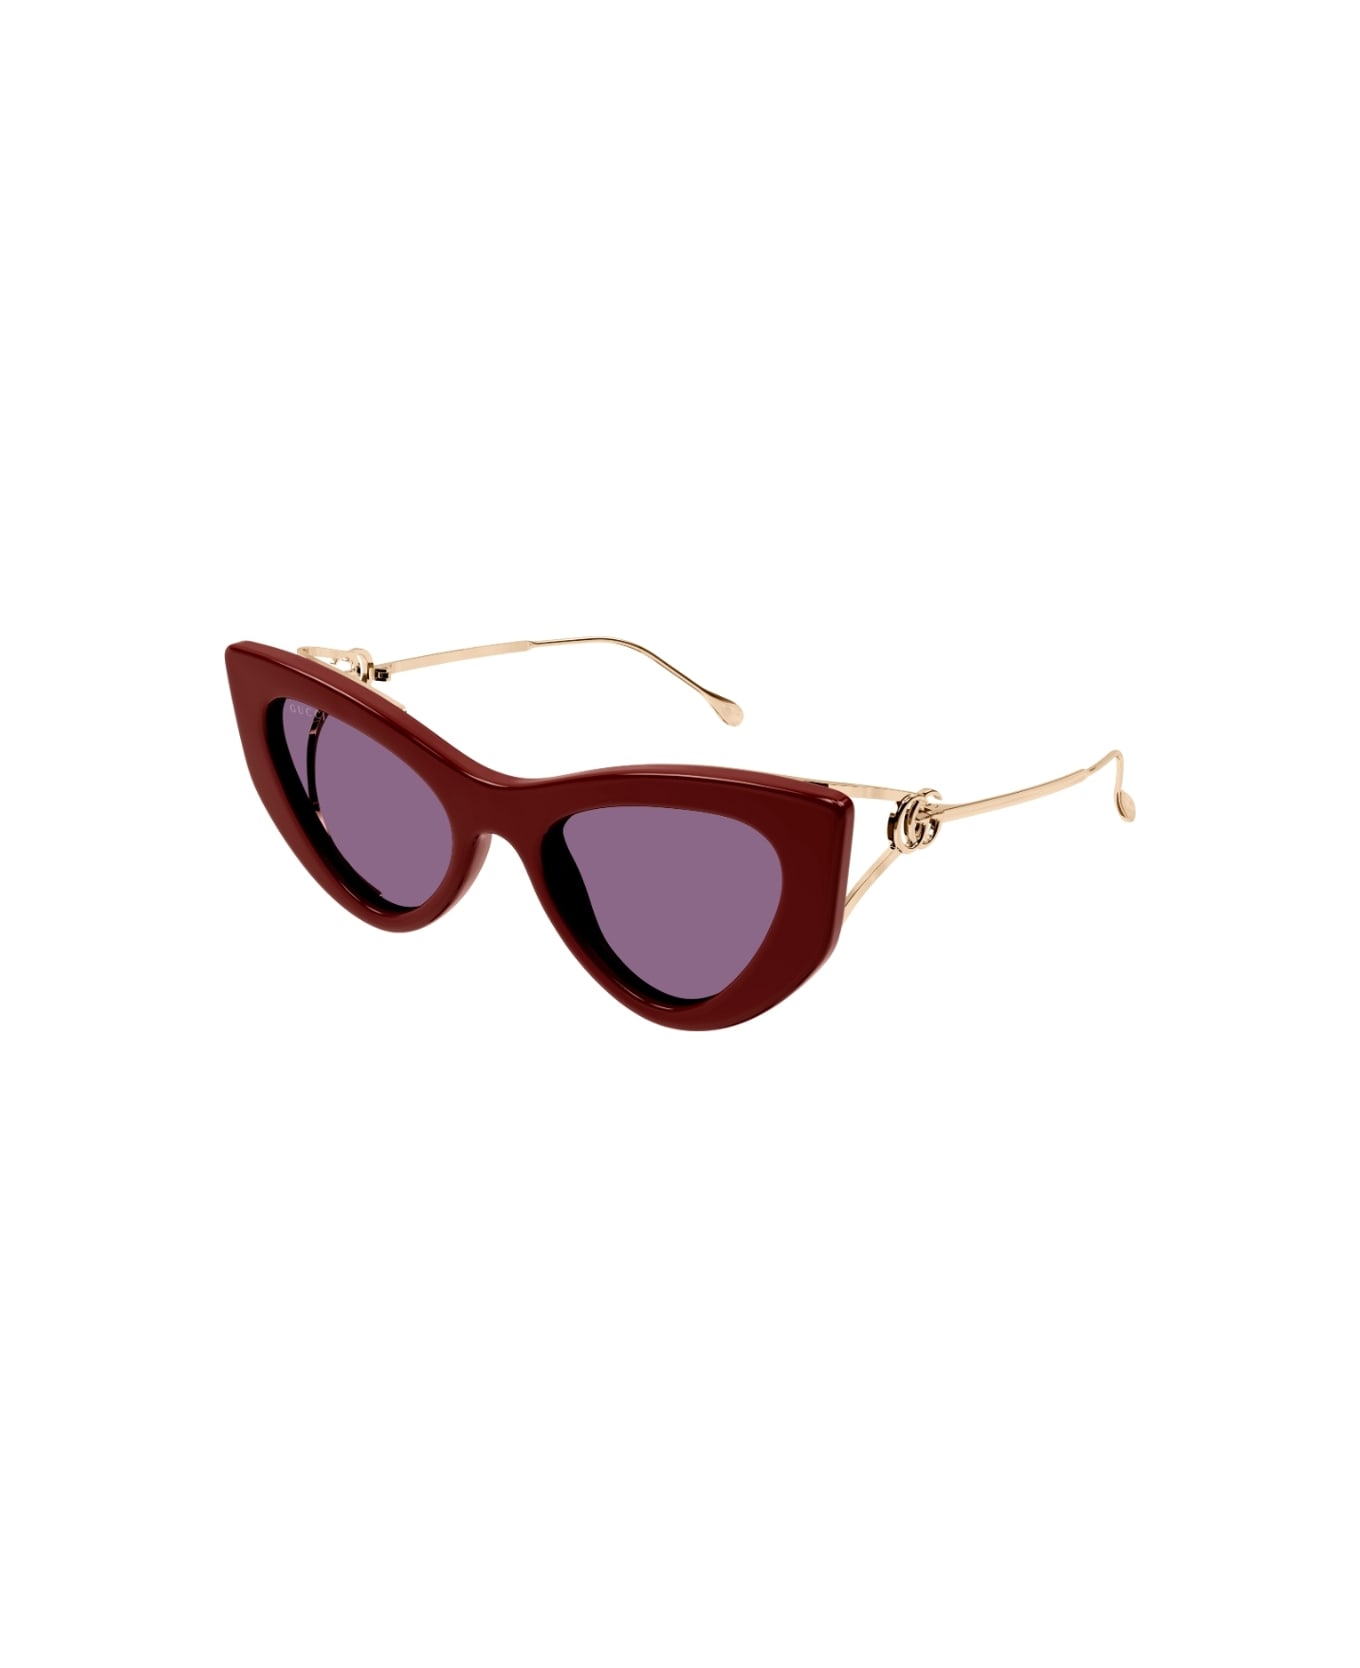 Gucci Eyewear GG1564S-004 Sunglasses - Burgundy e oro